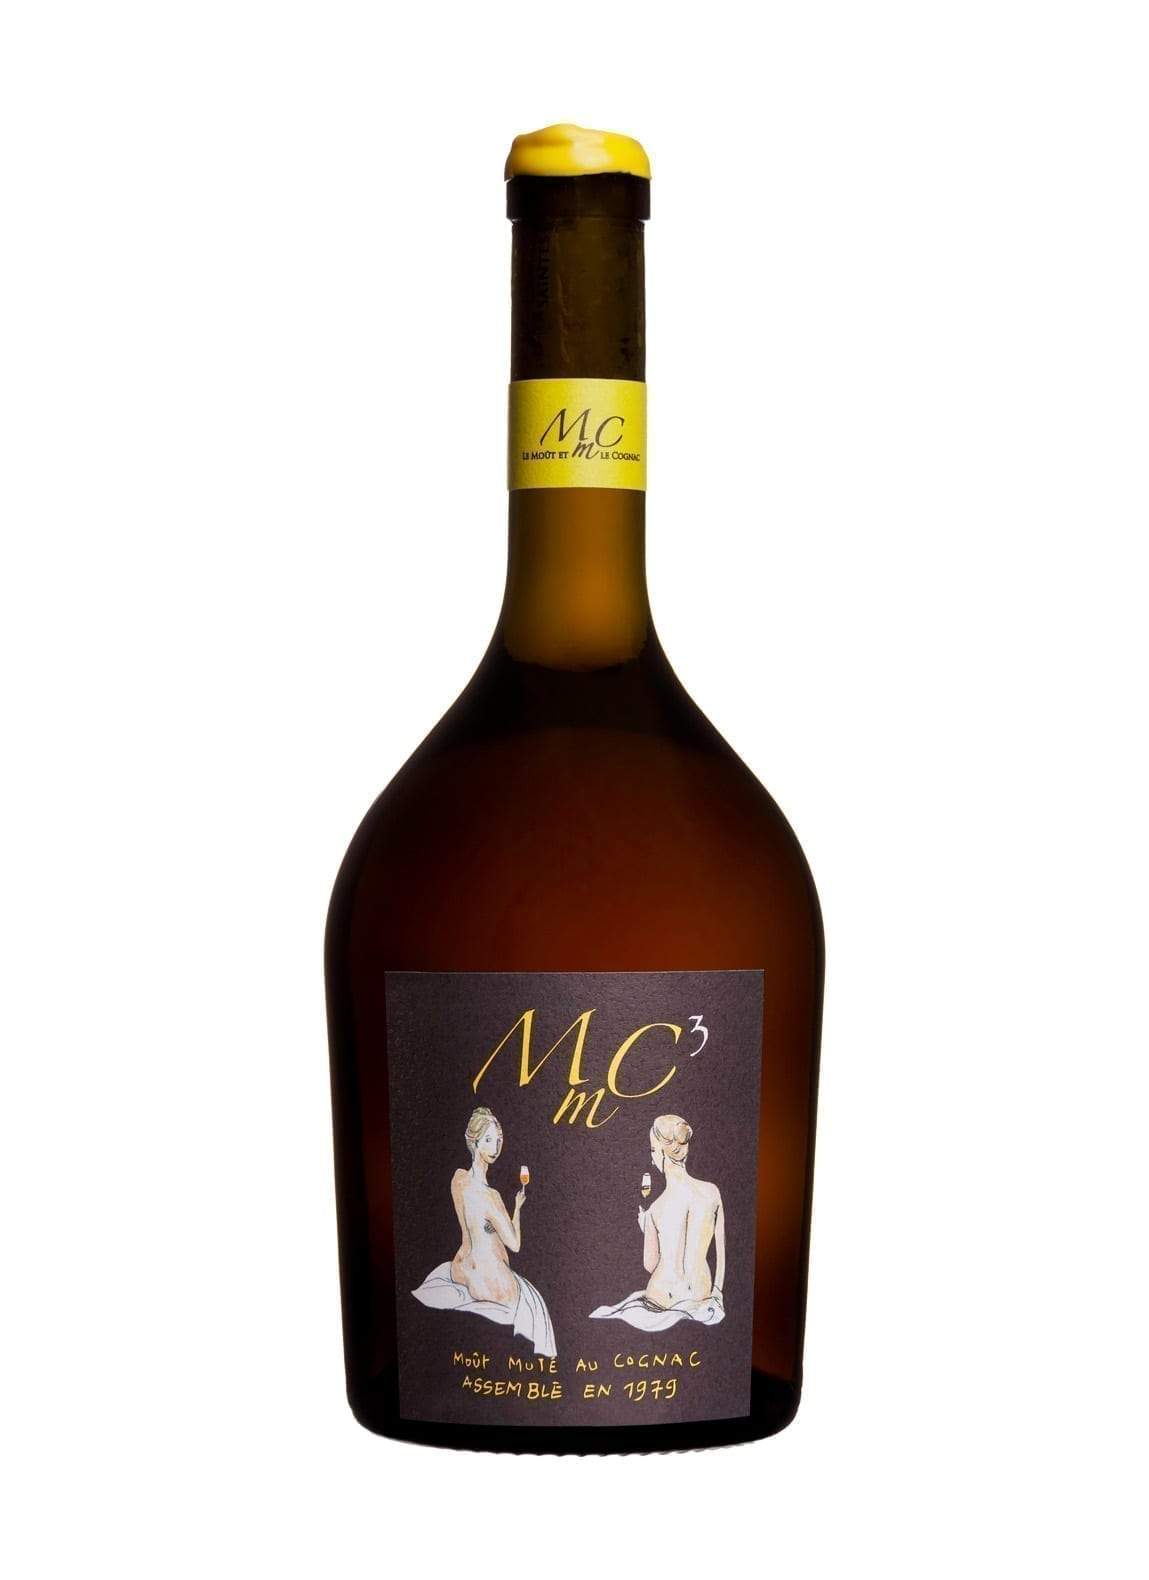 Grosperrin MMC 3 1979 Mistelle-type Pineau des Charentes 17% 750ml | Alcoholic Beverages | Shop online at Spirits of France